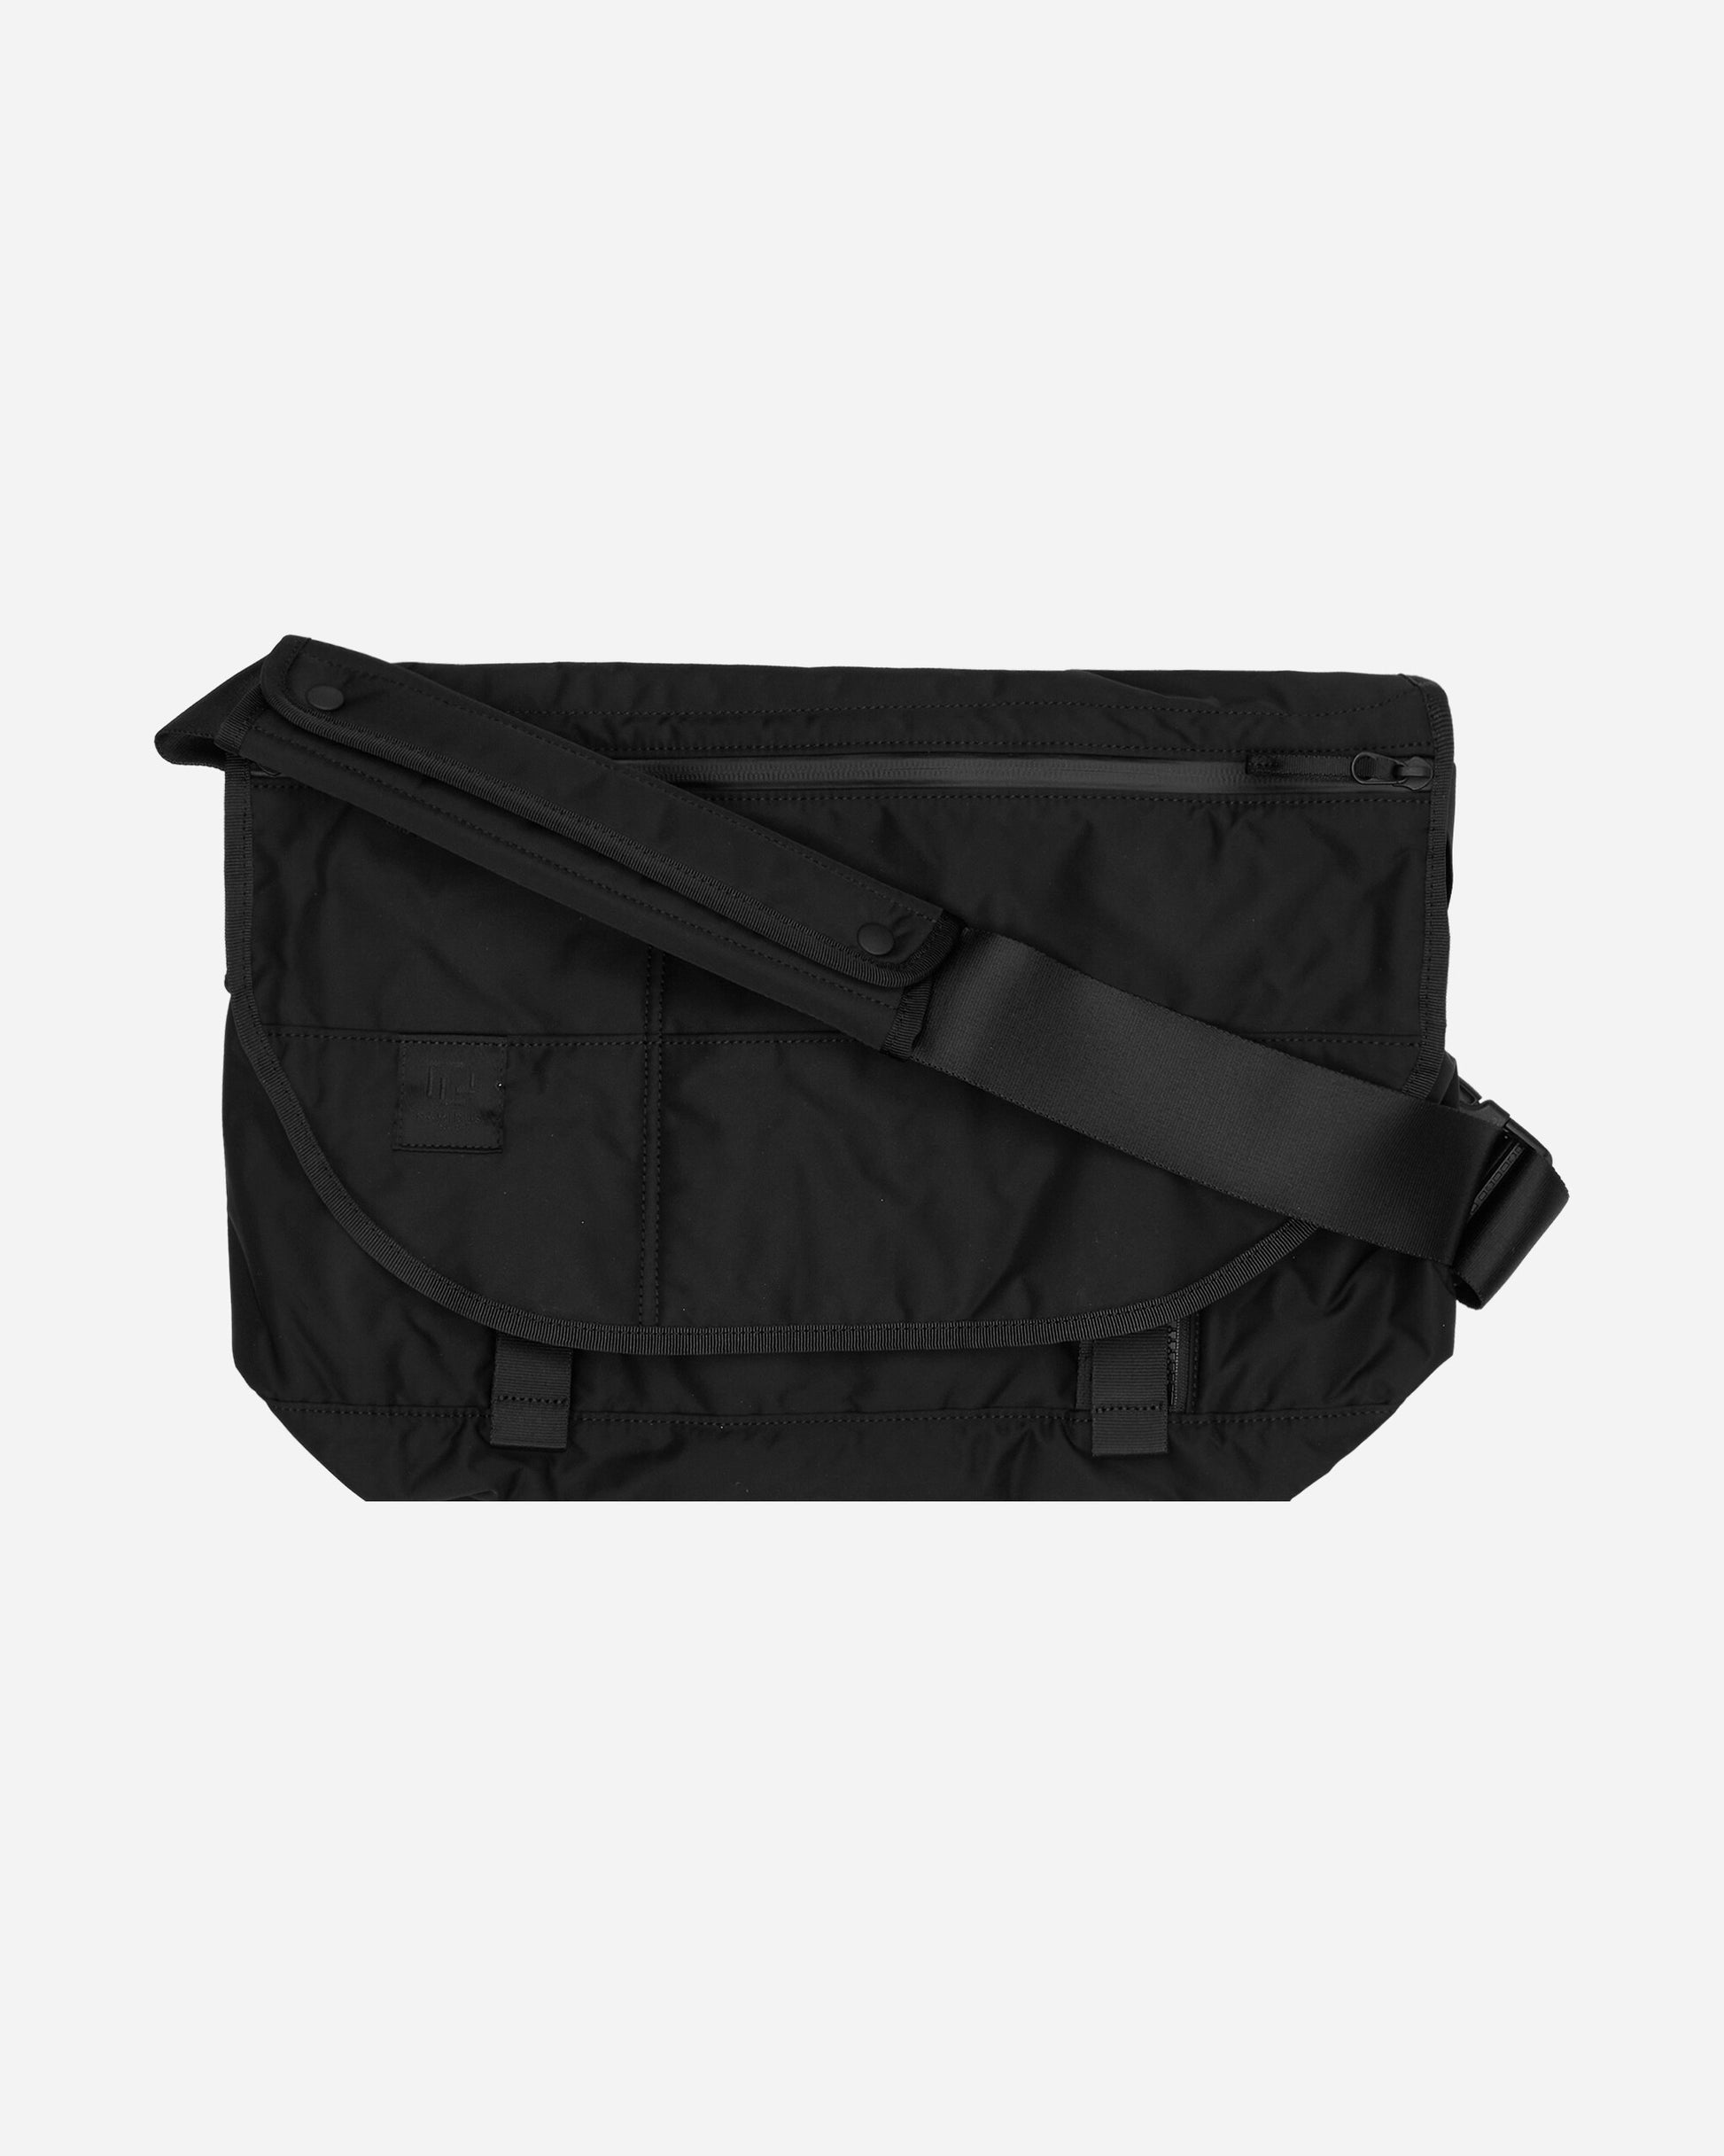 Ramidus Messenger Bag Black Bags and Backpacks Shoulder Bags B011096 001